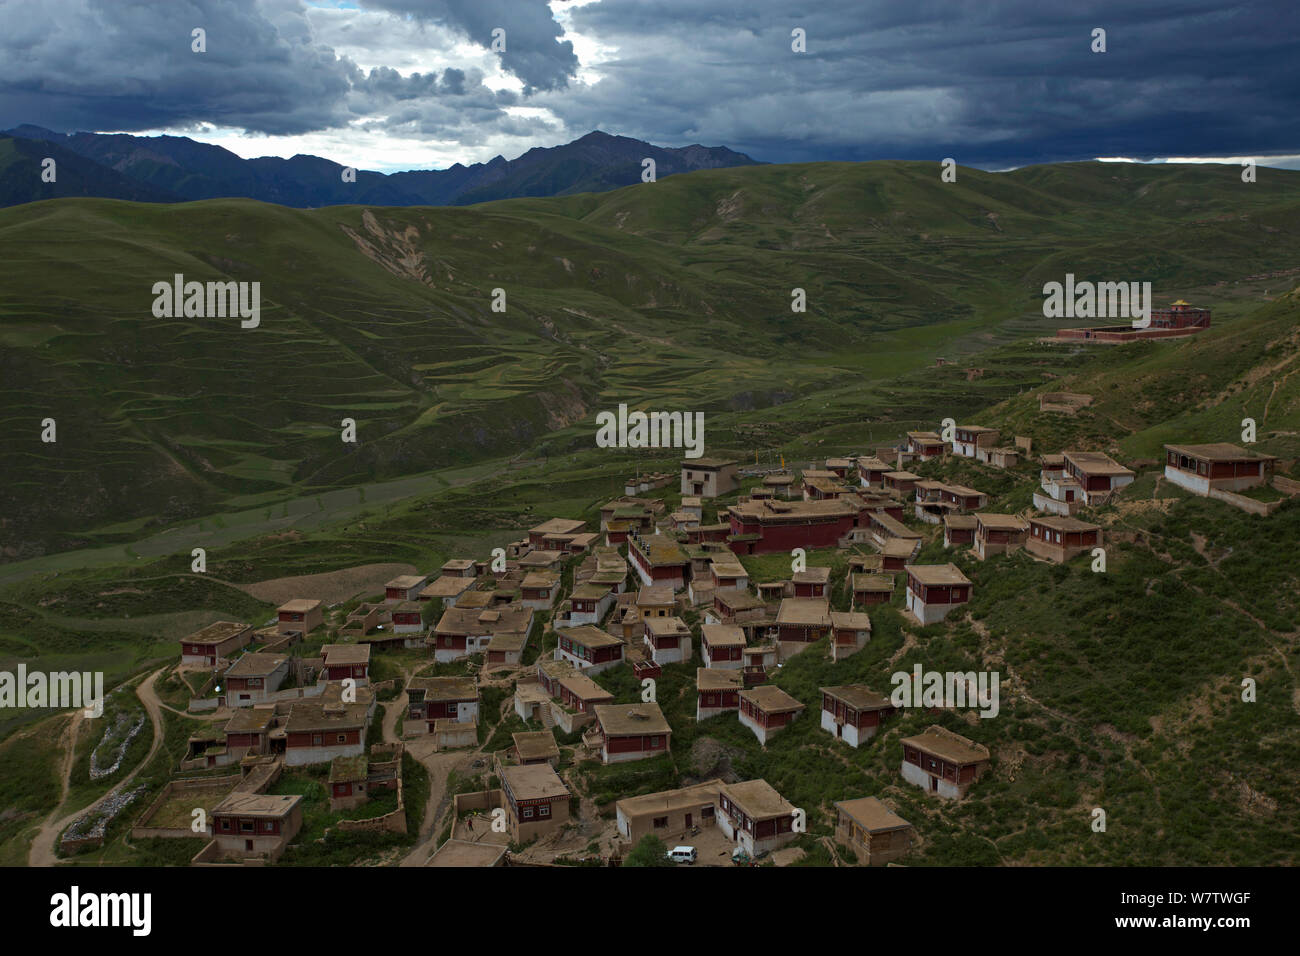 Rewu monasterio tibetano, en la ladera de montaña, Daocheng, provincia de Sichuan, meseta Qinghai-Tibetan (China), en agosto de 2010. Foto de stock